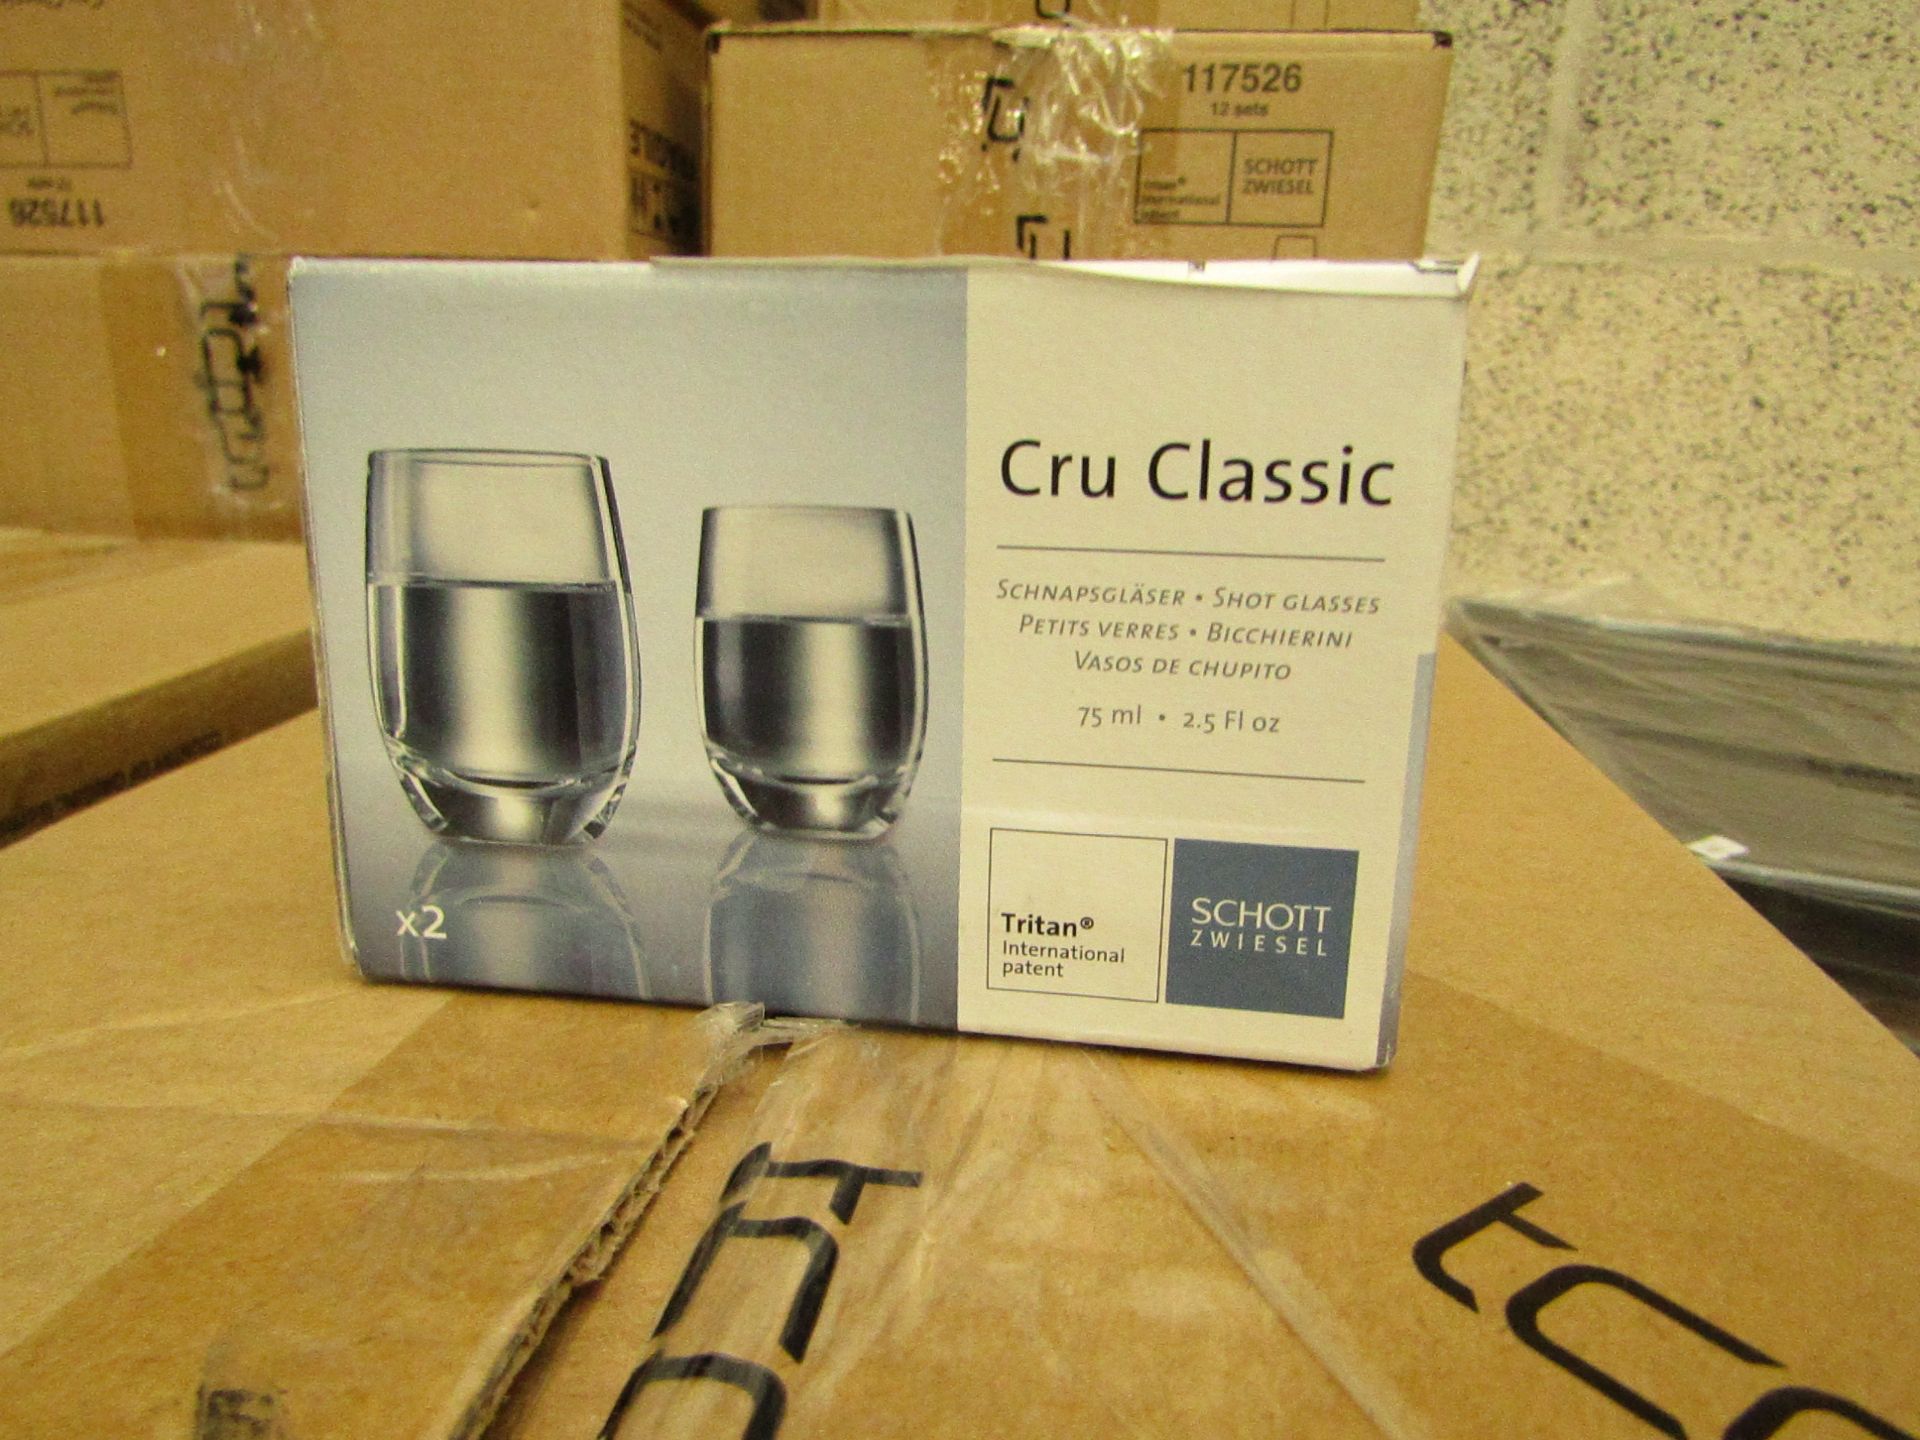 12x Sets of 2 Schott Zwiesel Cru Classic shot glasses, new.